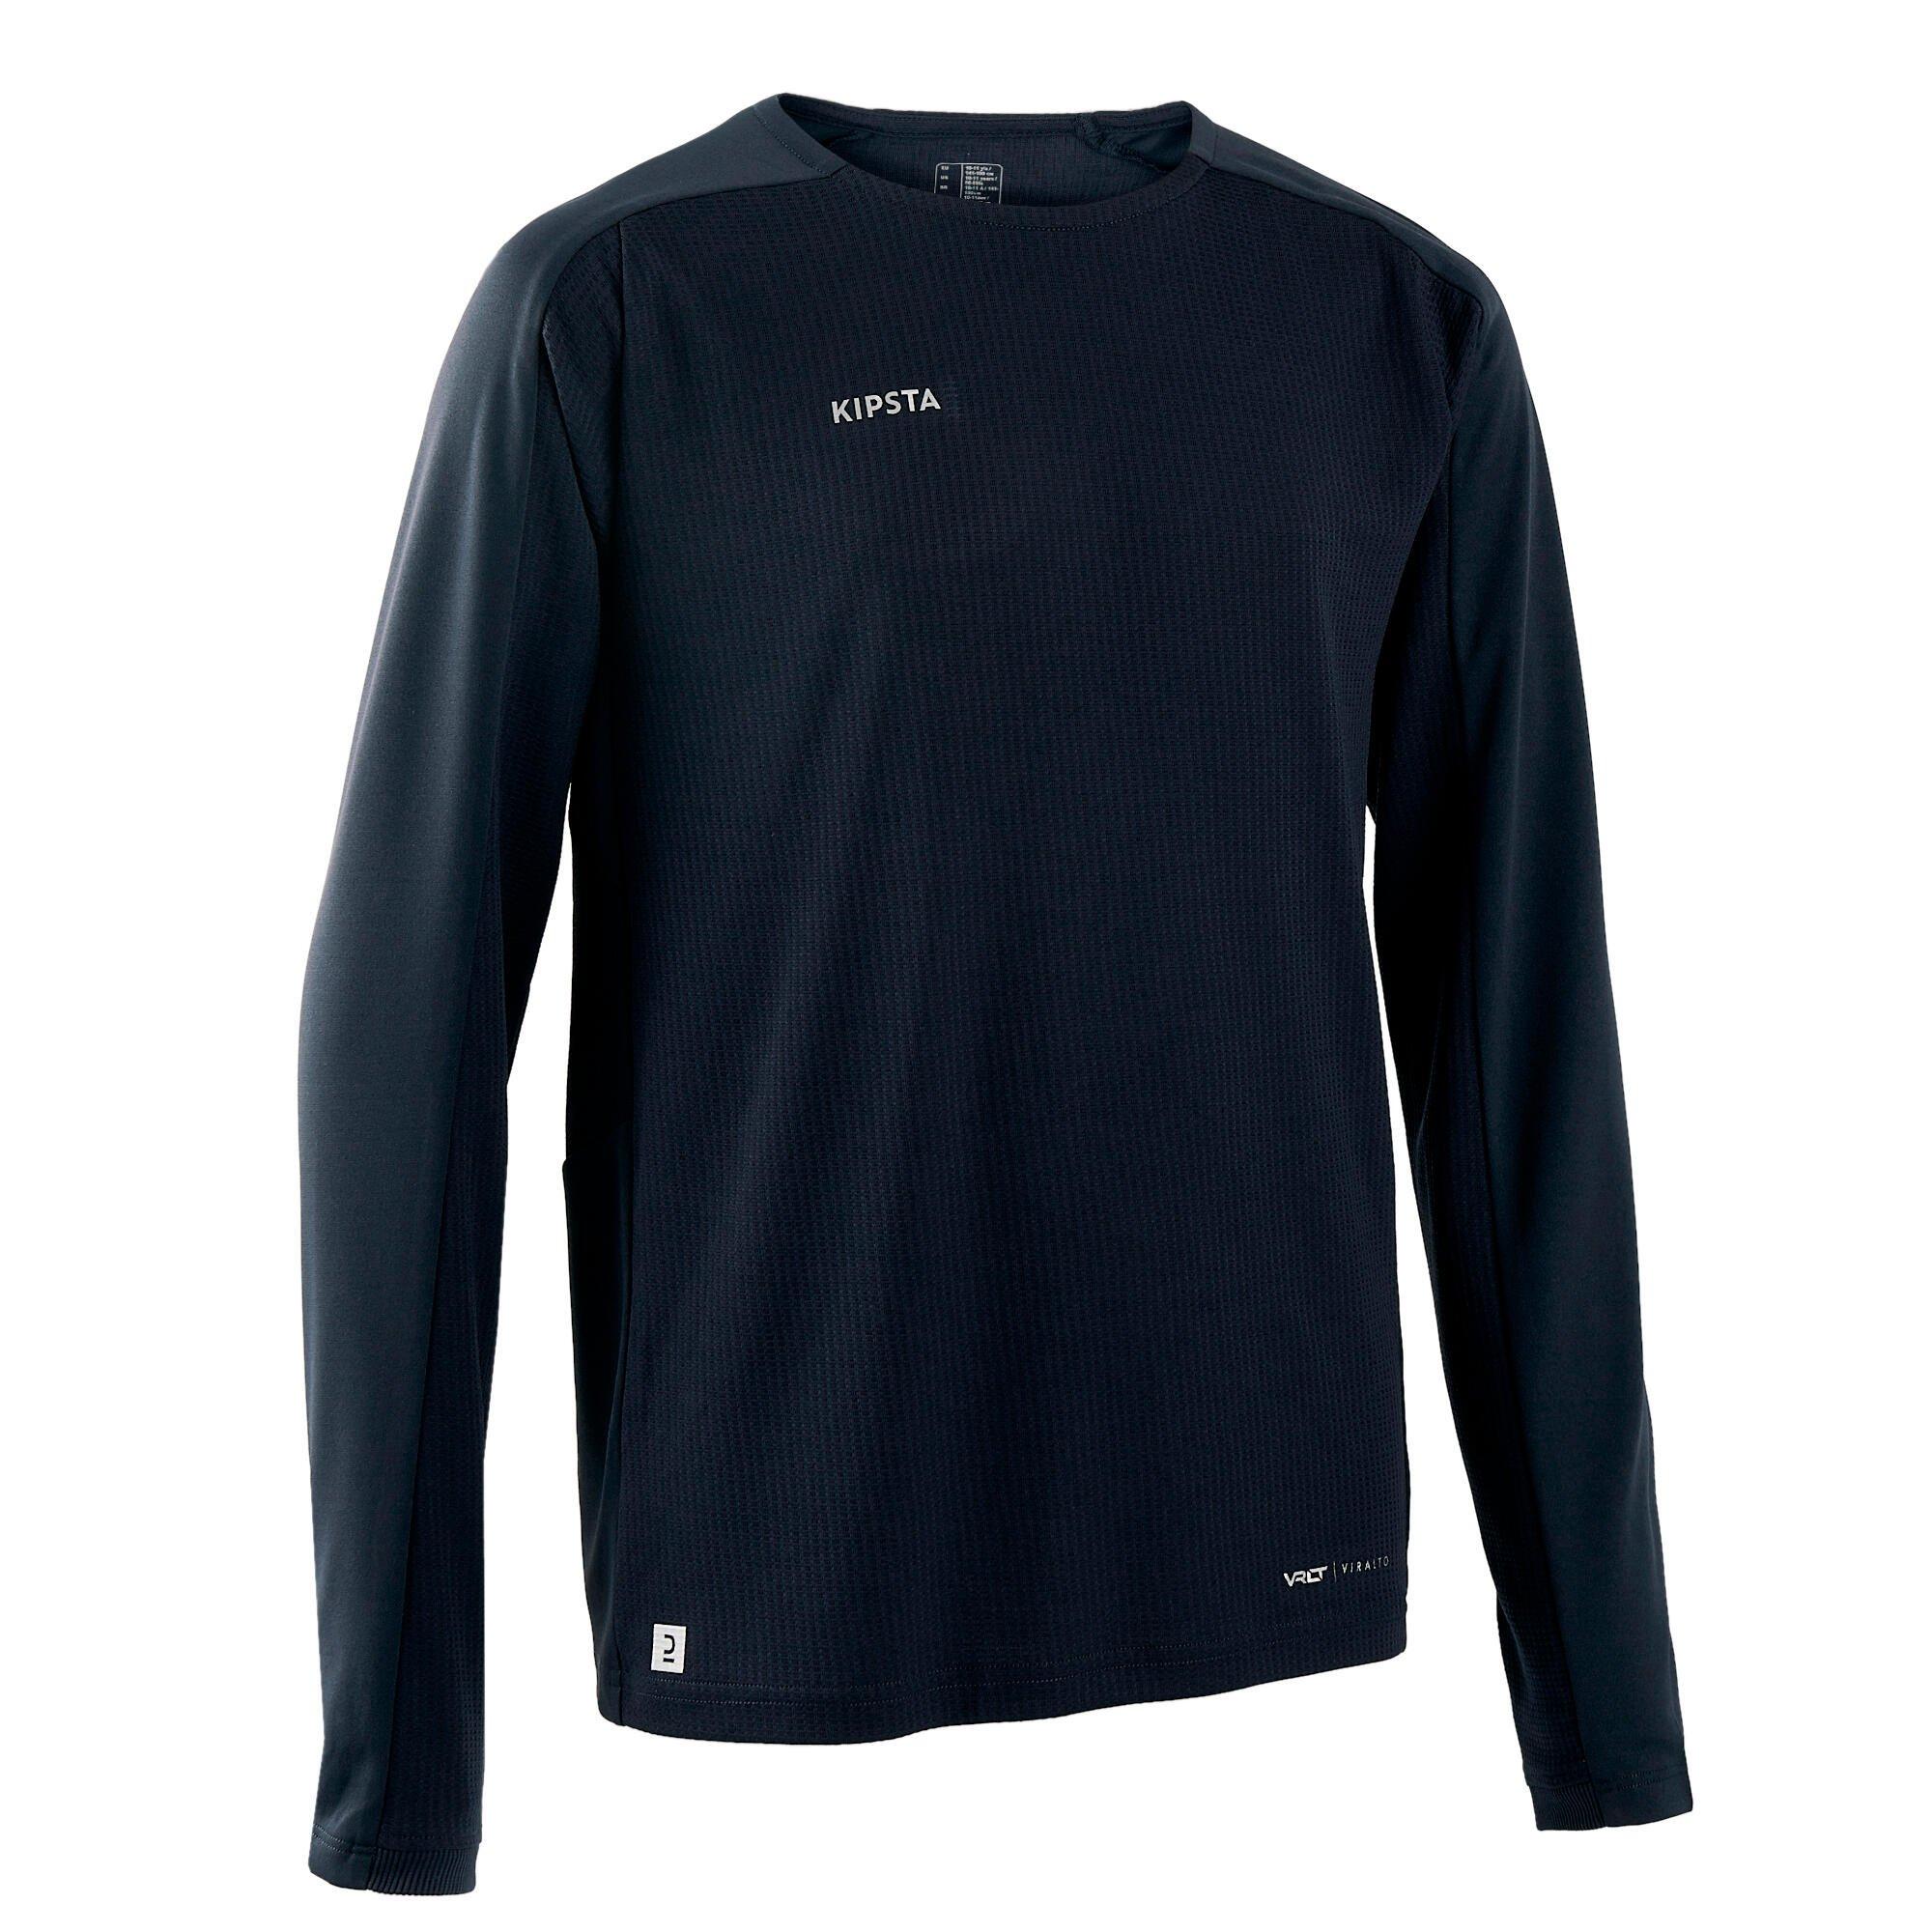 Decathlon Long-Sleeved Football Shirt Viralto Club